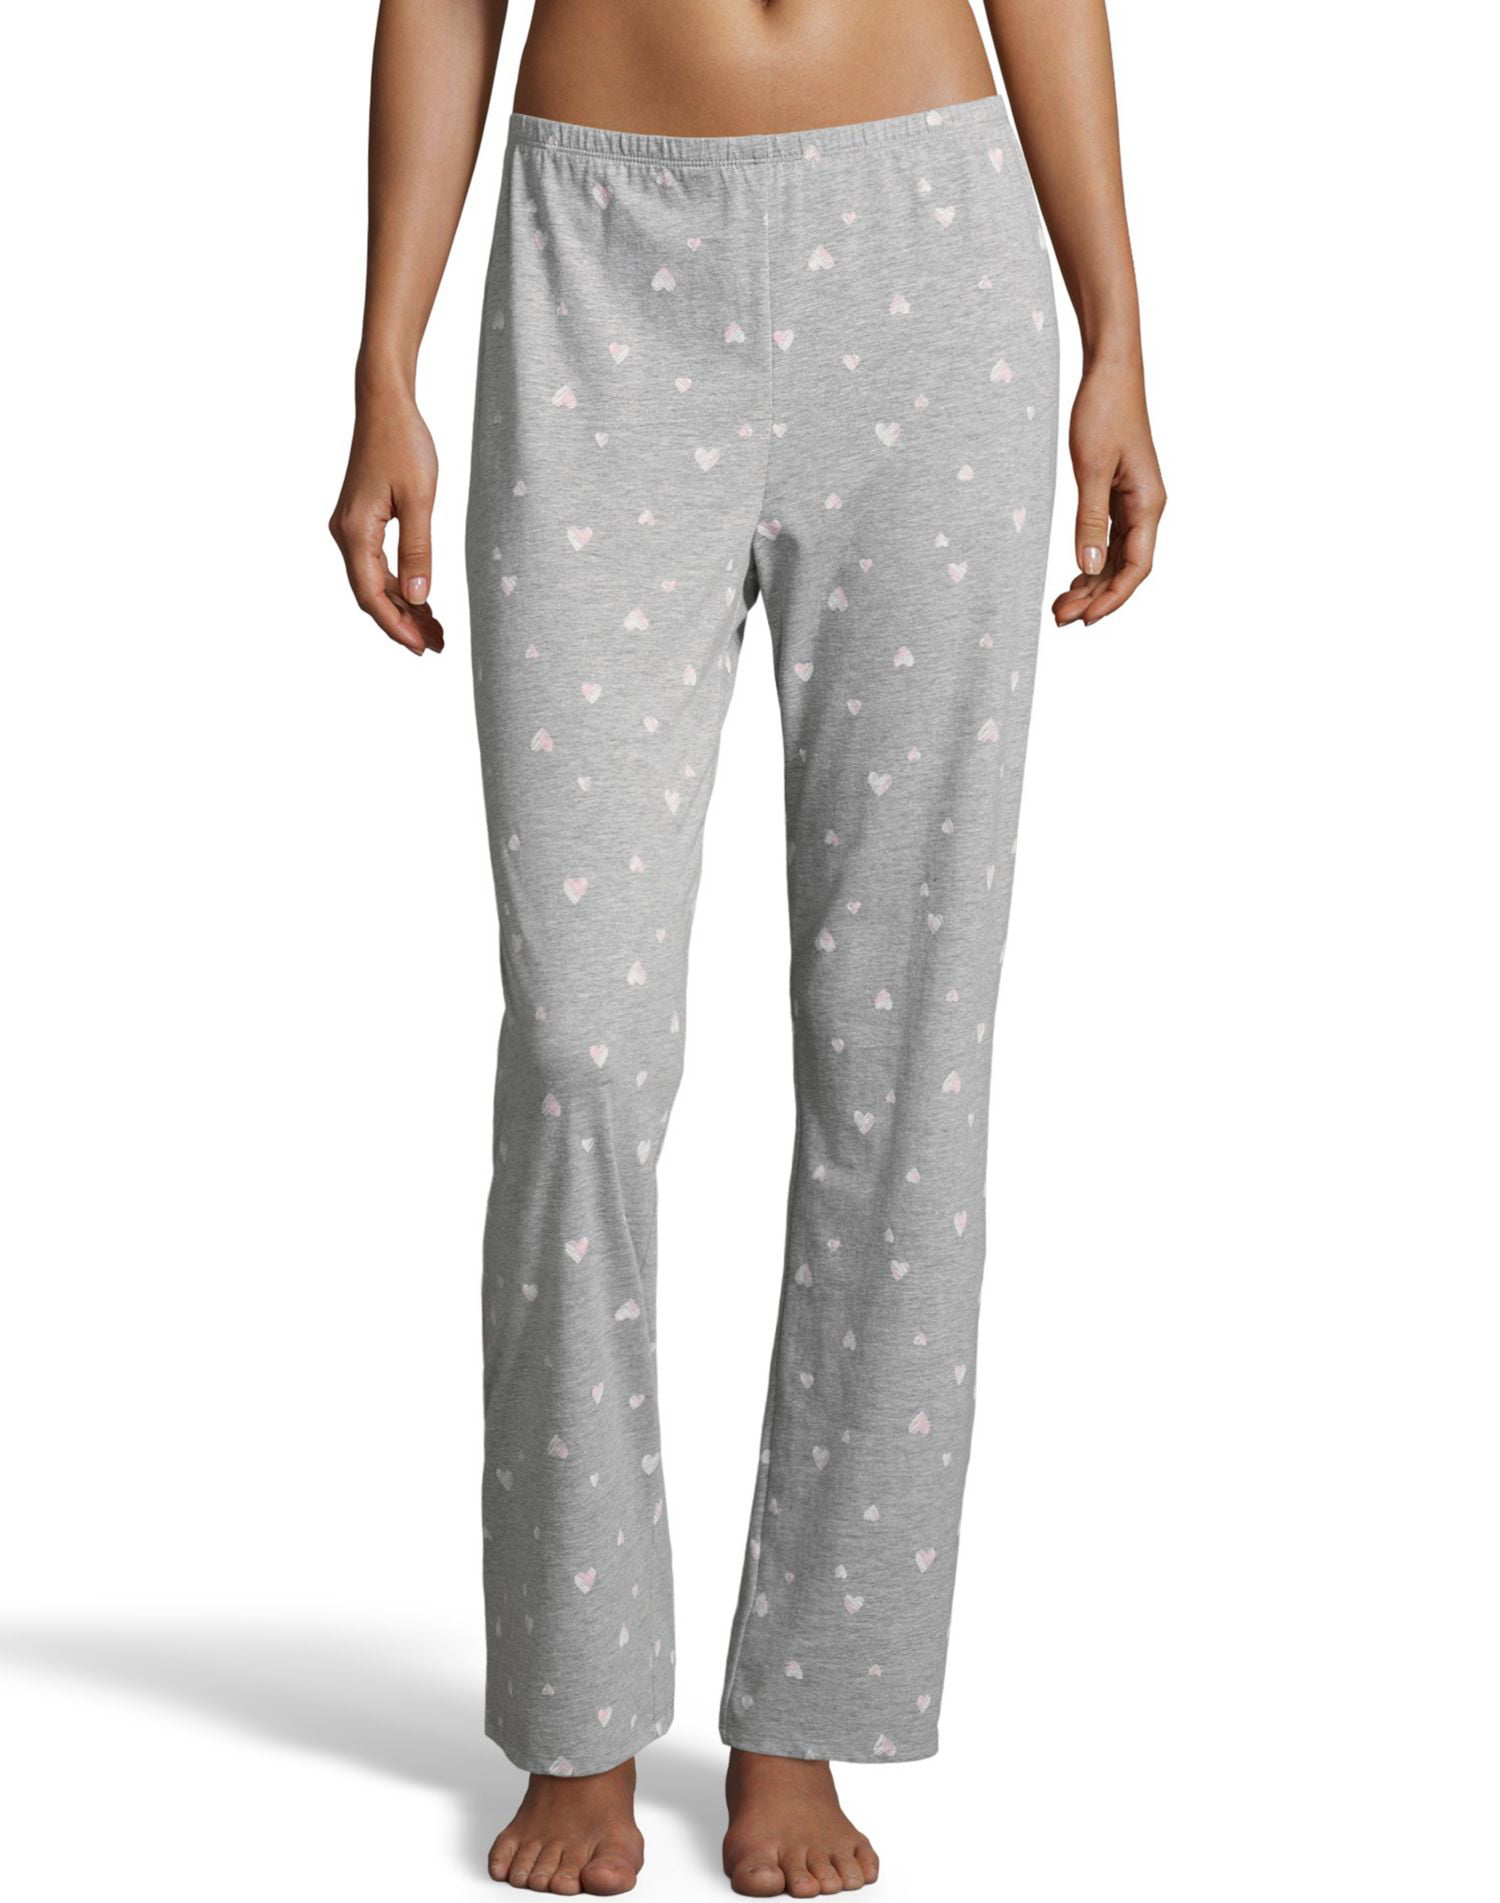 Laura Ashley 2 piece womens French print pajama set Size XL - $24 - From  Brenda